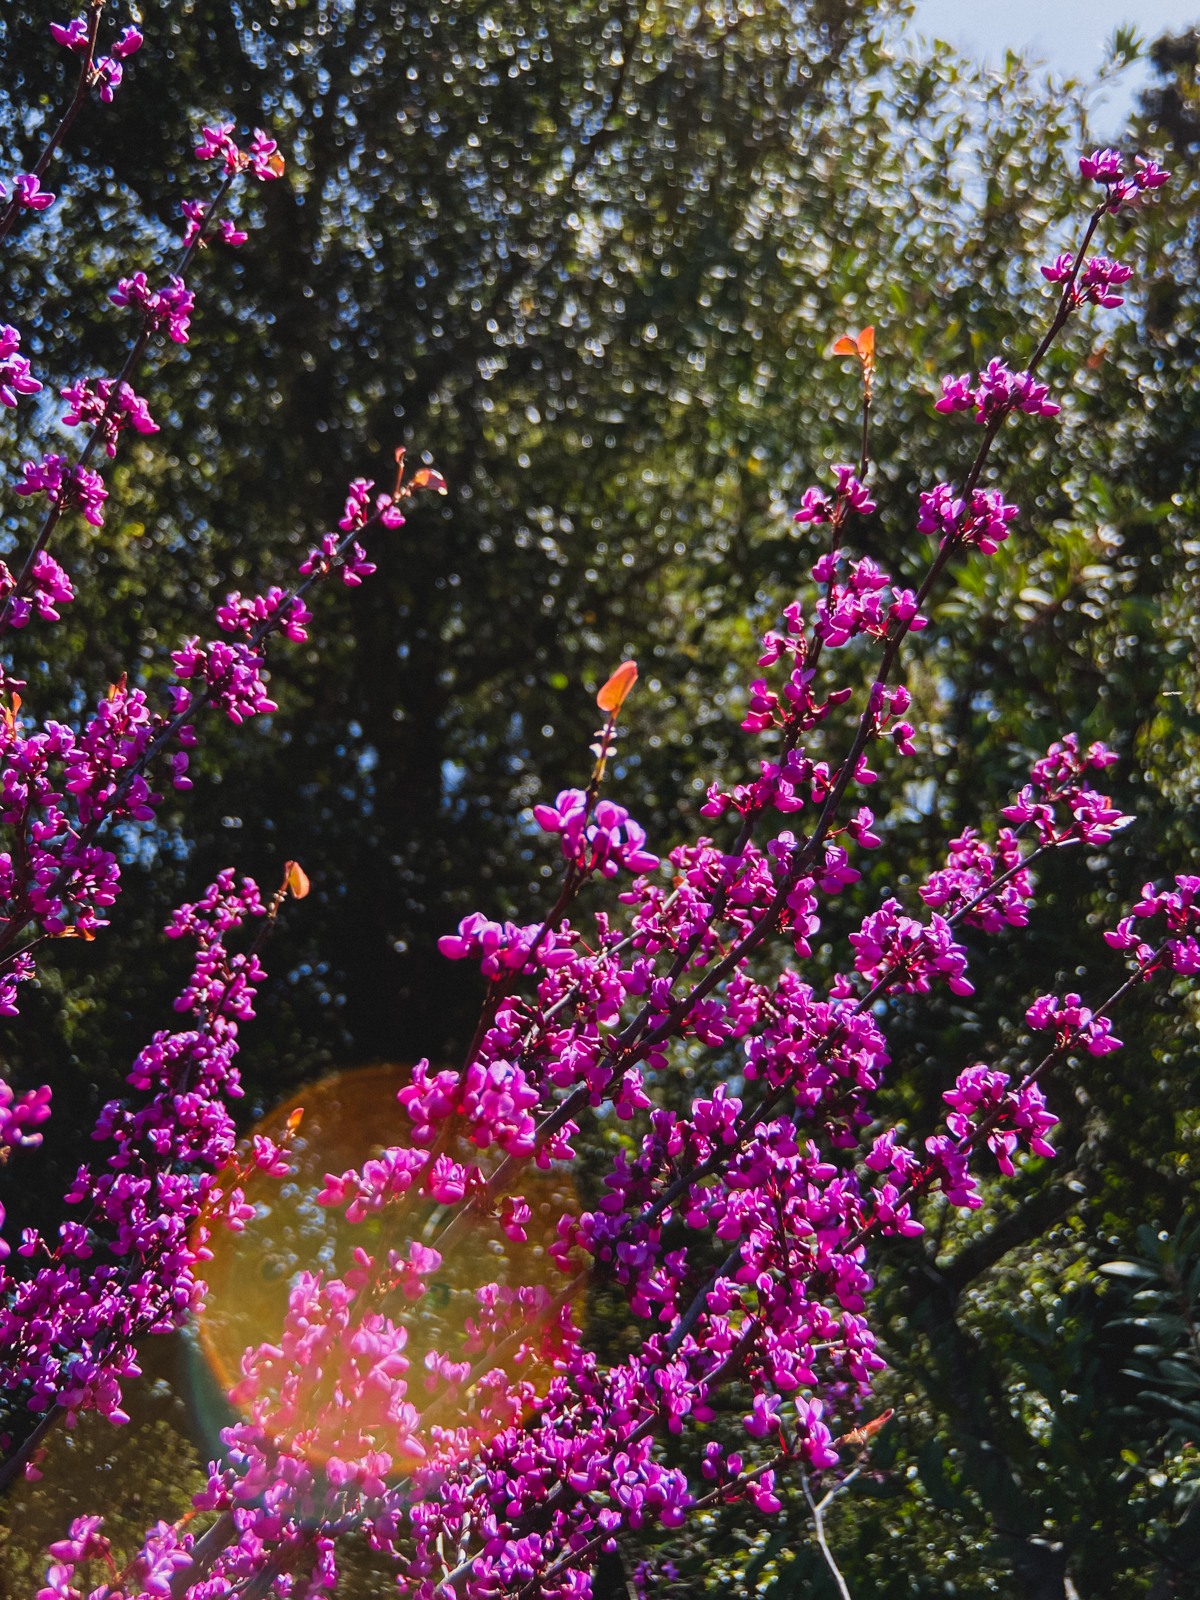 Blossoms in spring at Santa Barbara Botanic Garden